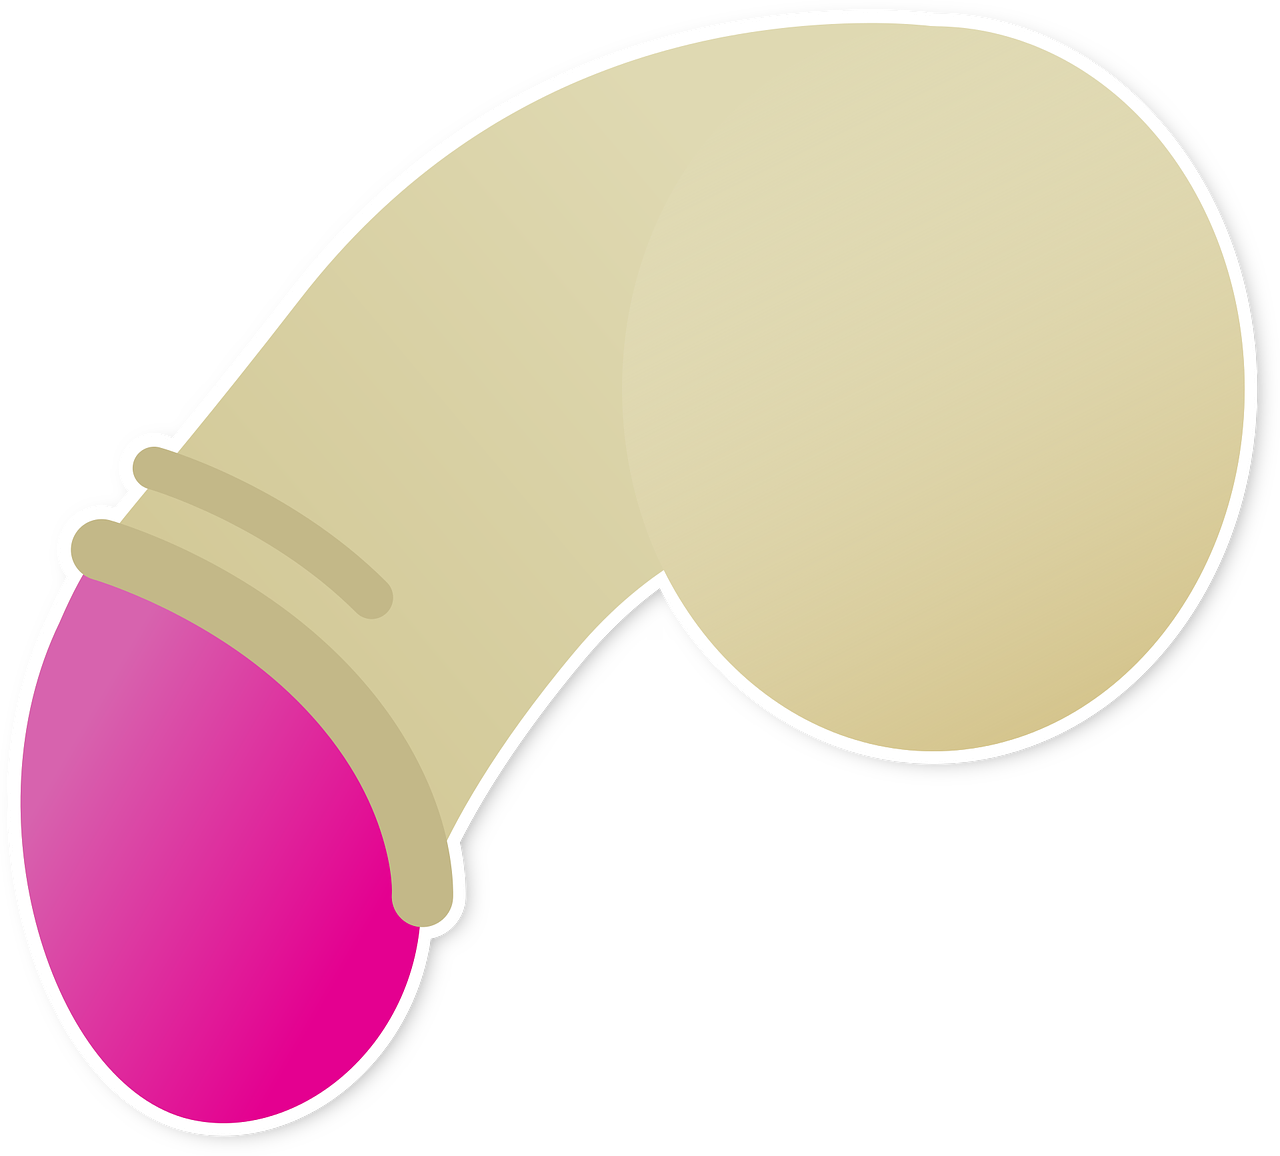 Penis Man Vector Icon Masculinity Free Image From Needpix Com